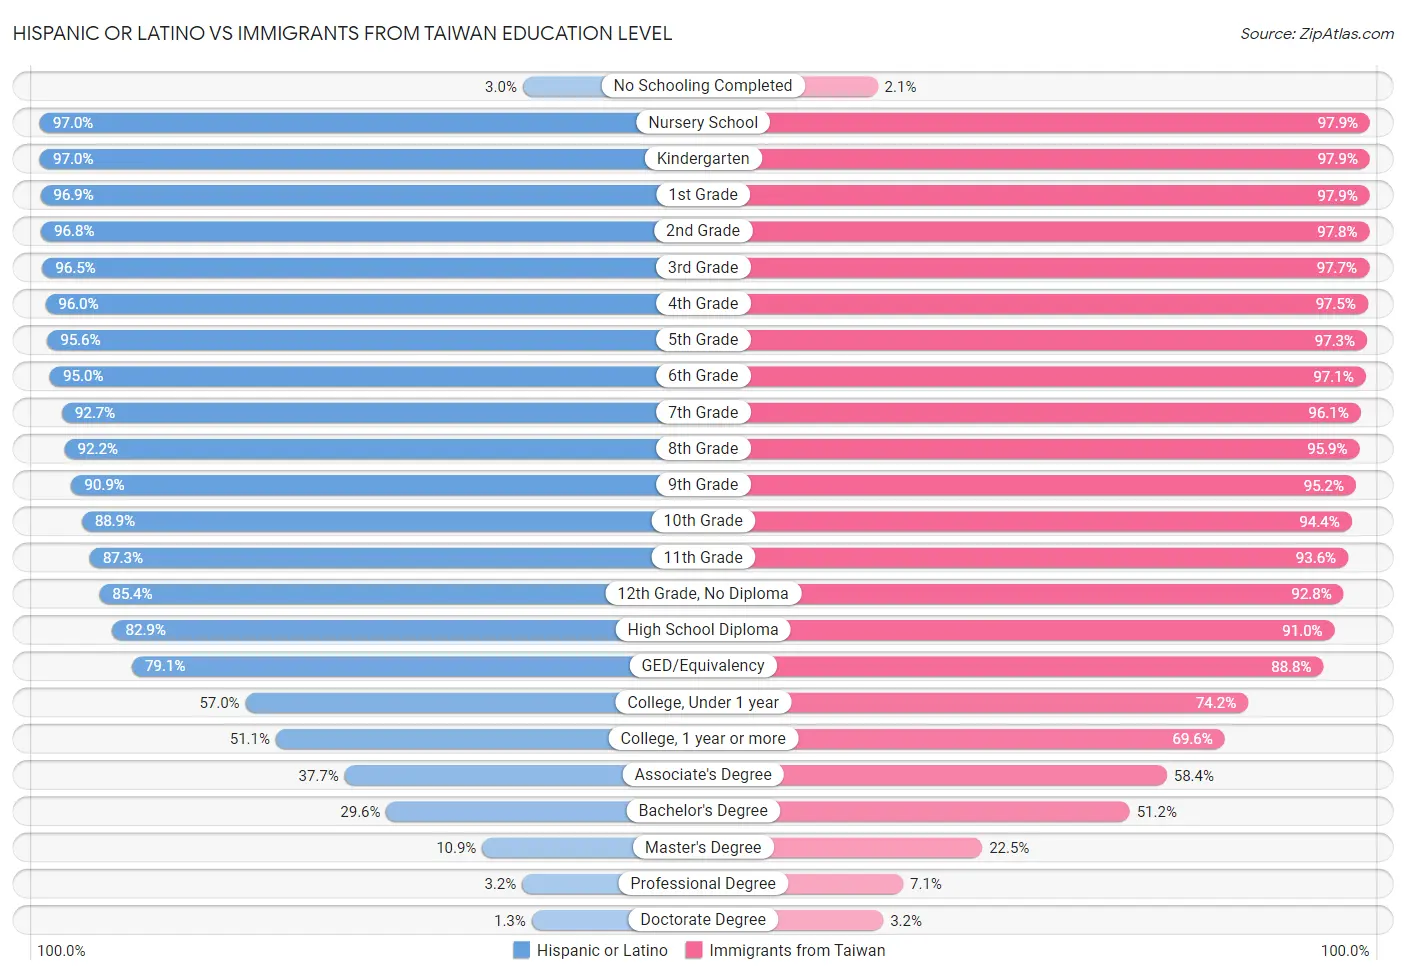 Hispanic or Latino vs Immigrants from Taiwan Education Level